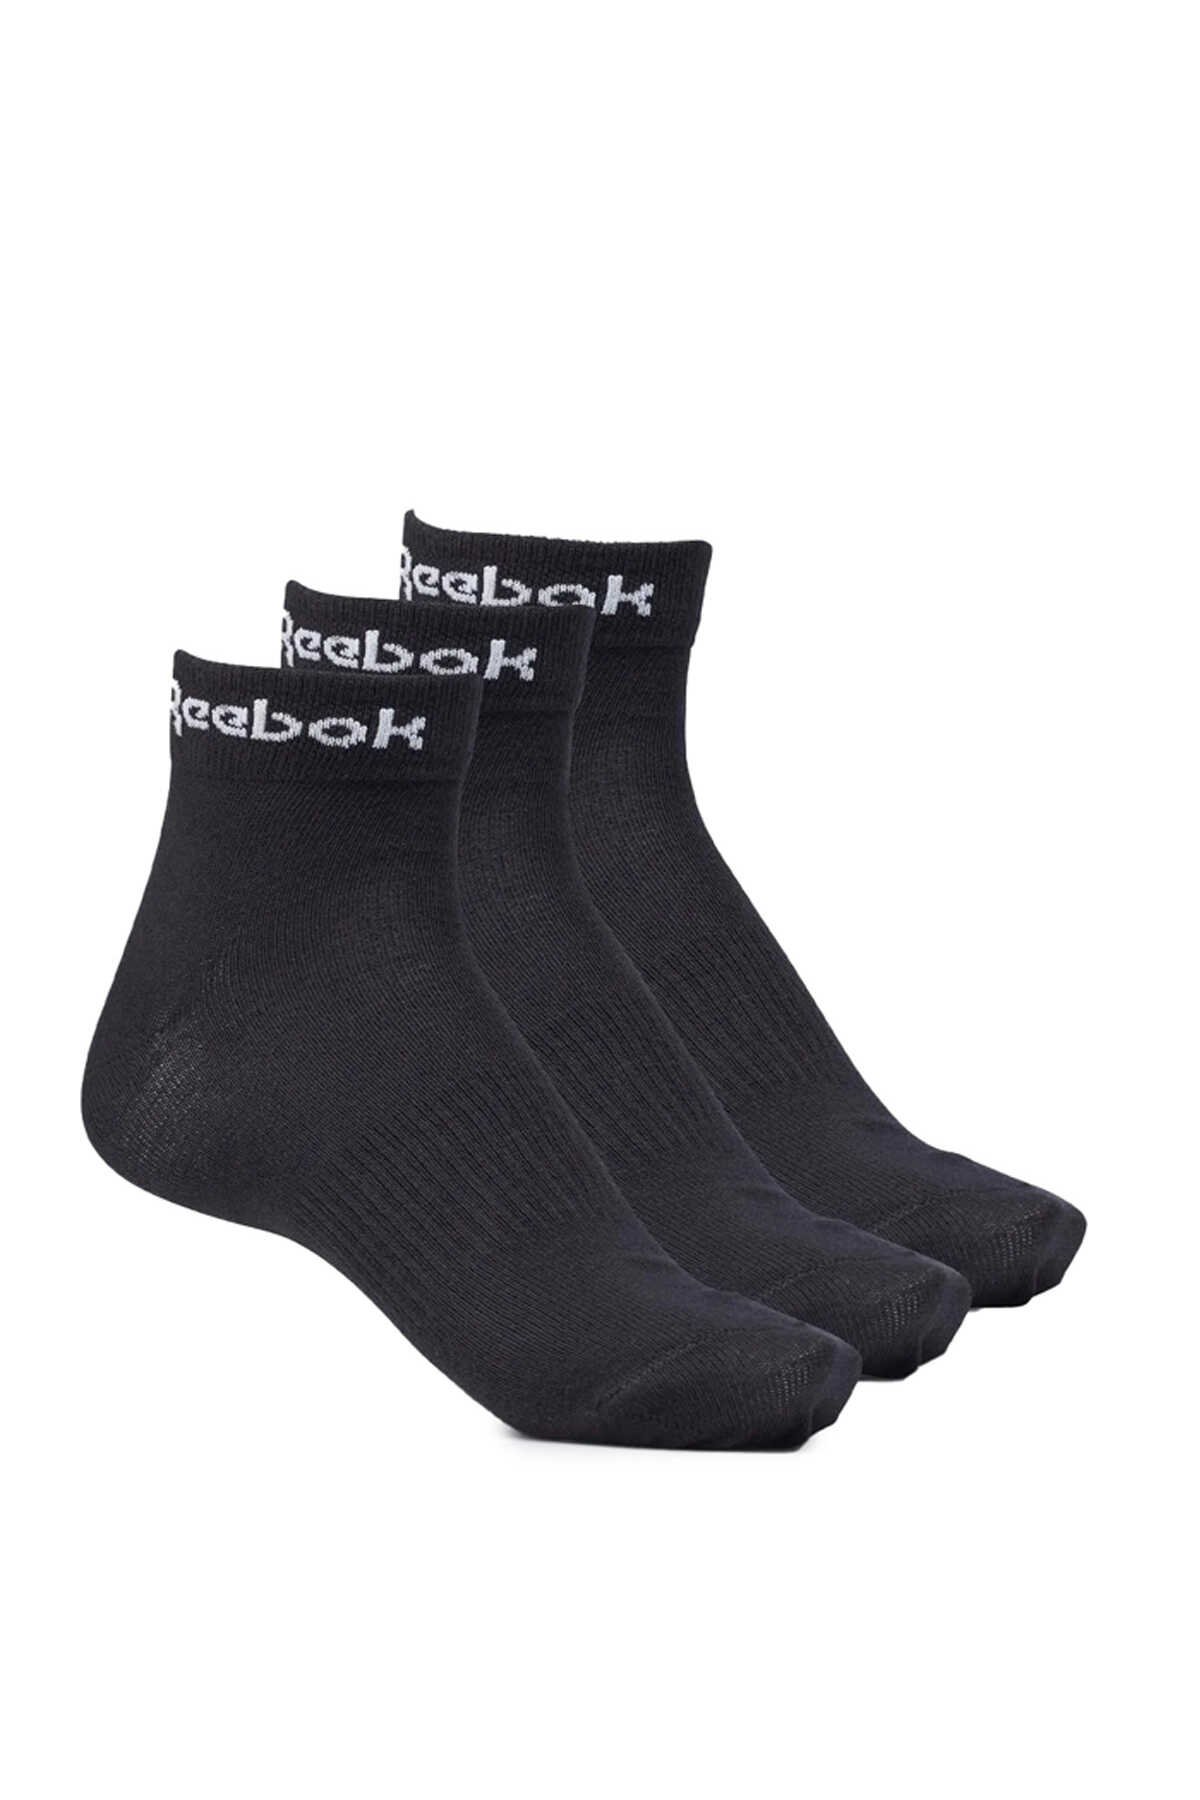 Reebok - Reebok CORE ANKLE SOCK Unisex Tişört Siyah_0